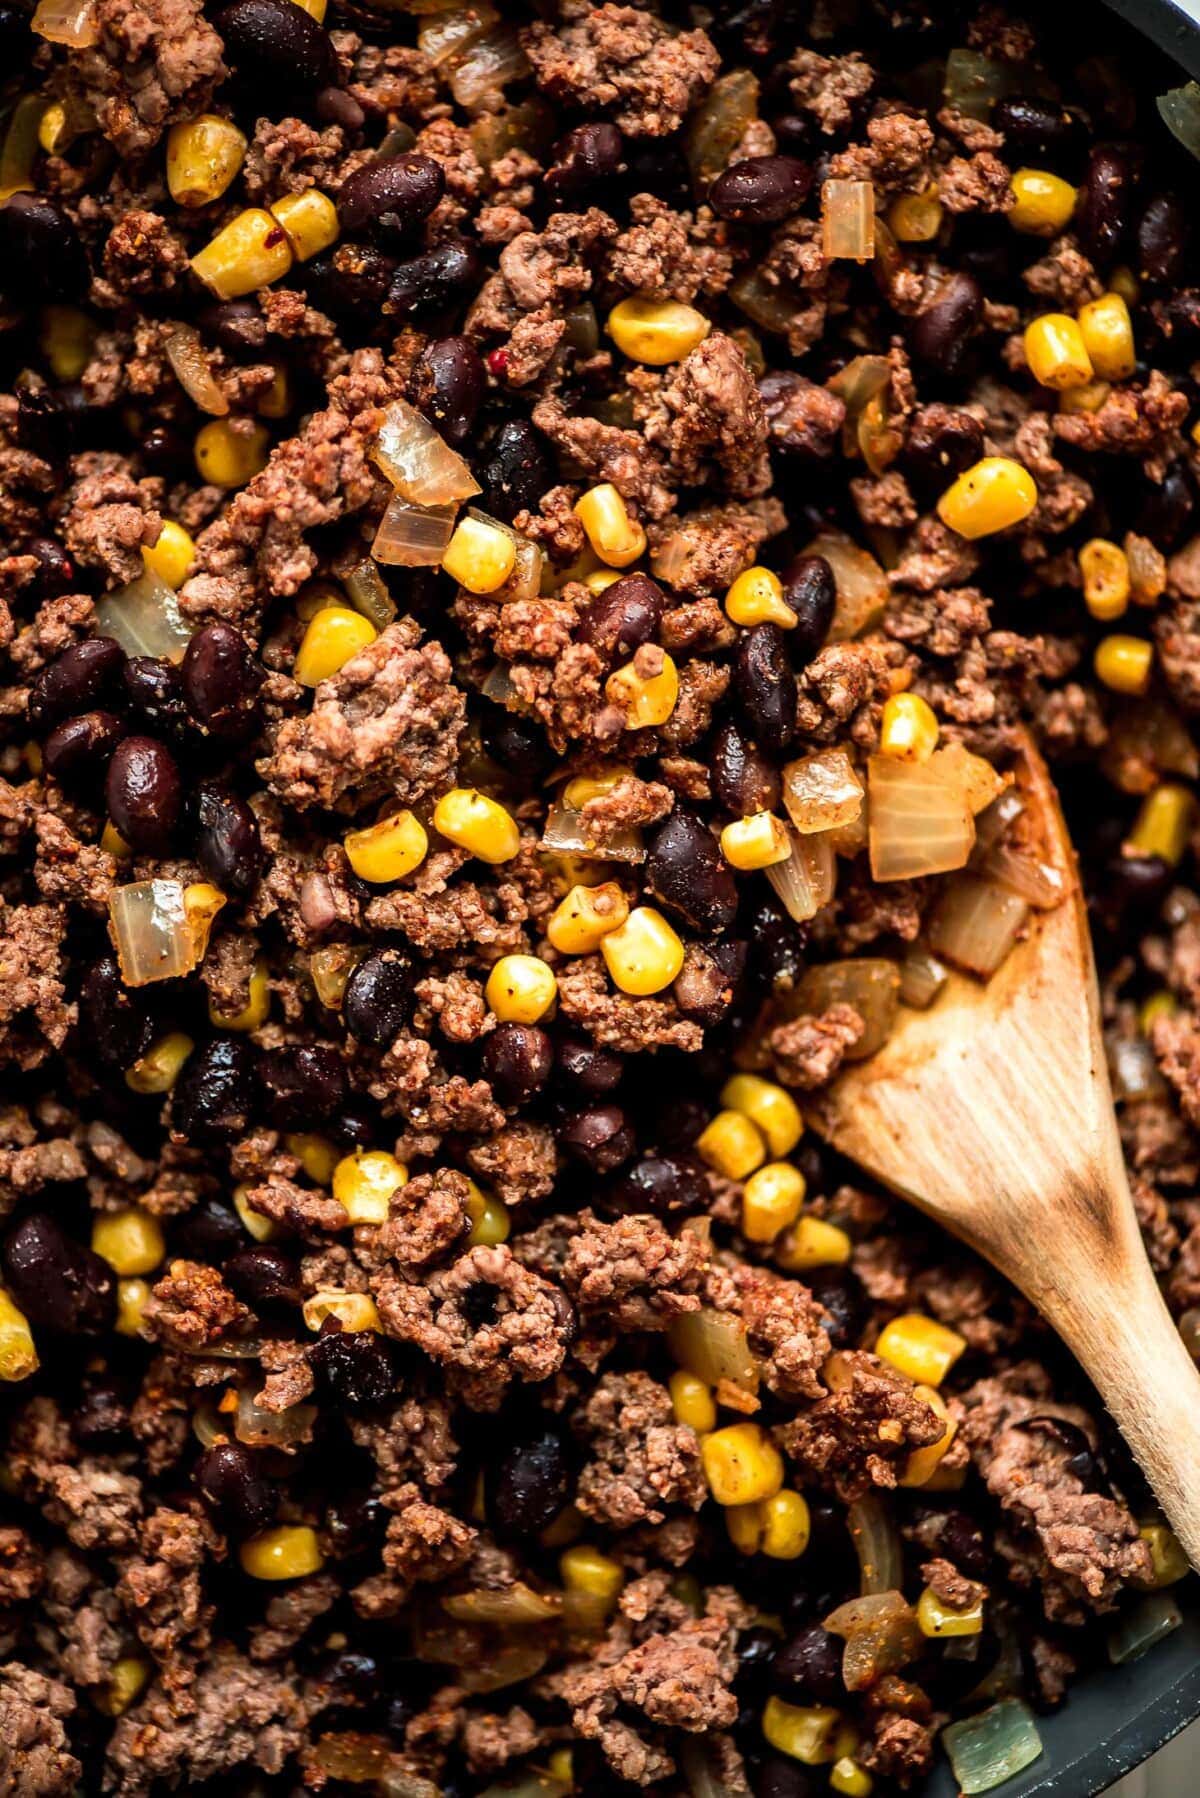 Meat mixture for enchilada casserole close up image.